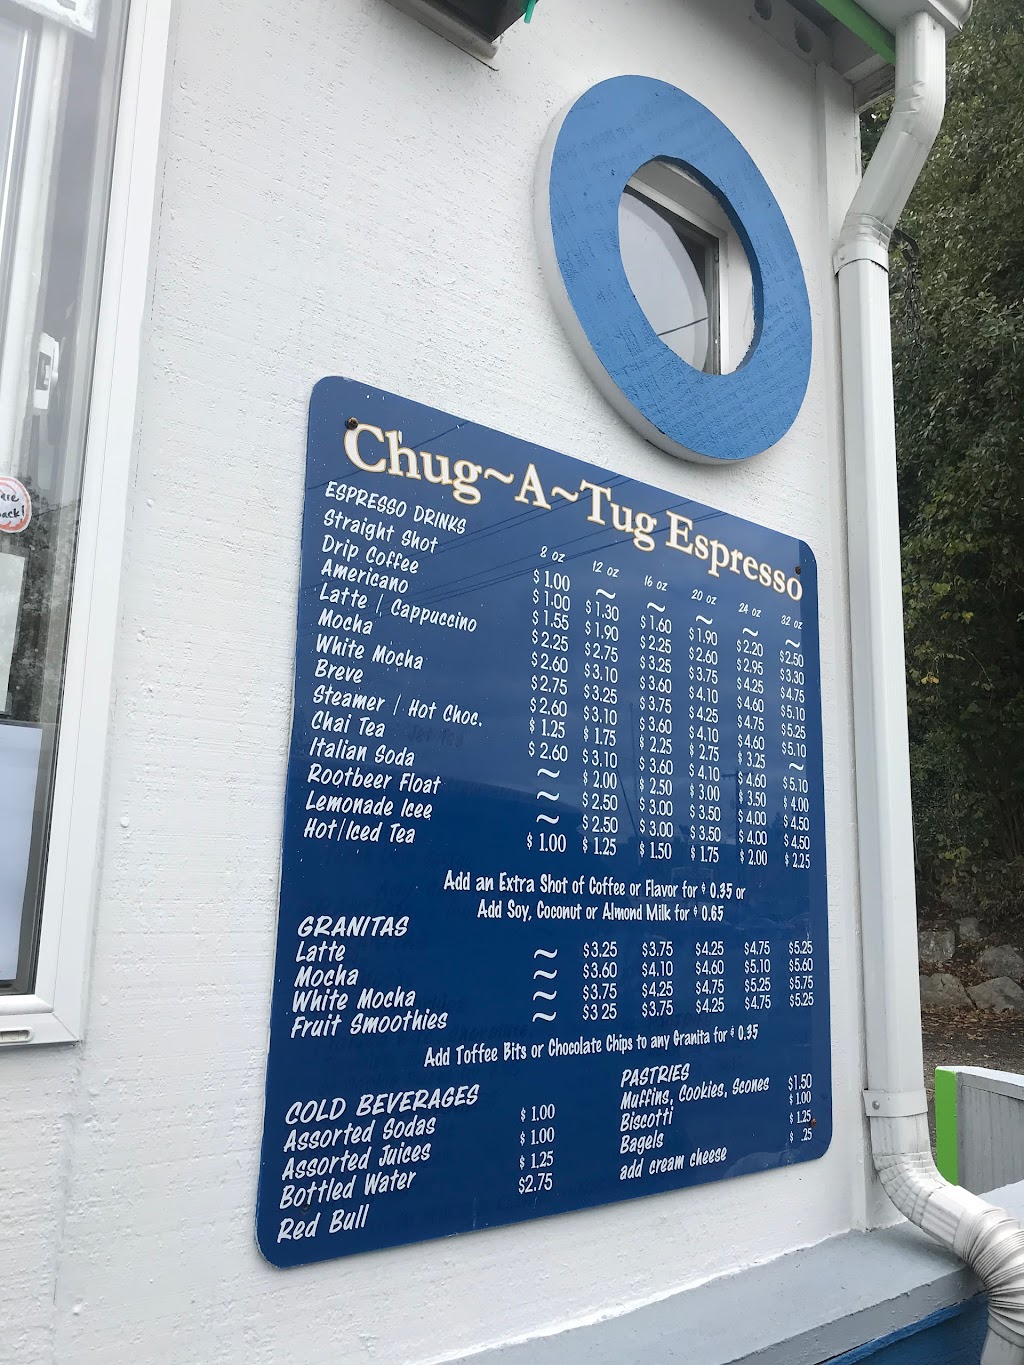 Chug-A-Tug Espresso | 110 Bay St, Port Orchard, WA 98366 | Phone: (360) 874-2273